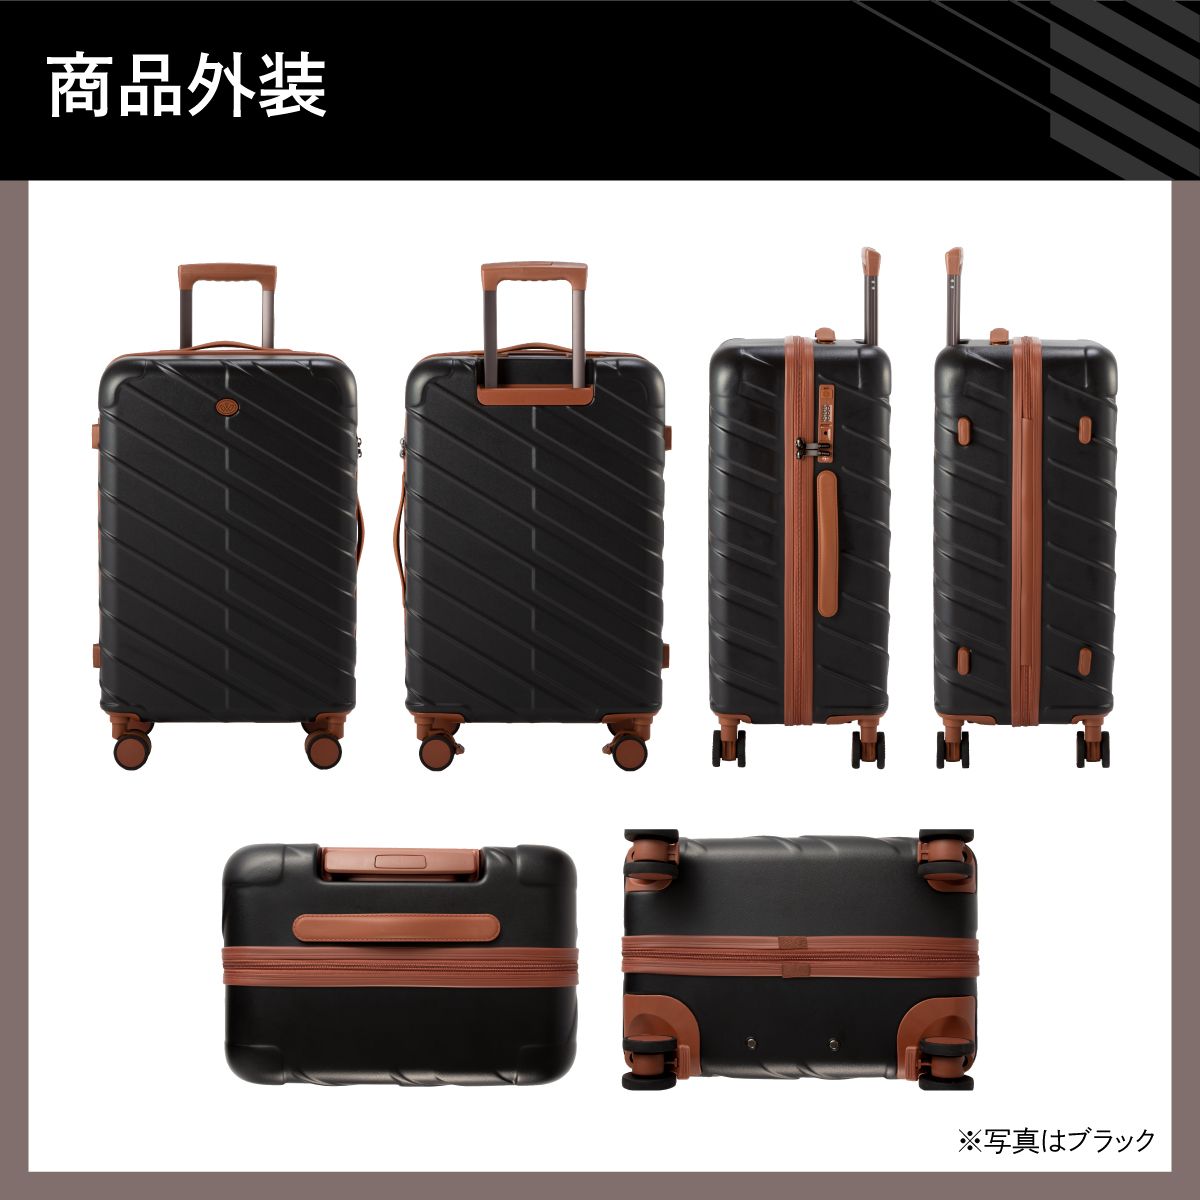 &WEAR スーツケース Mサイズ ストッパー付き 軽量 高機能 高品質 大 